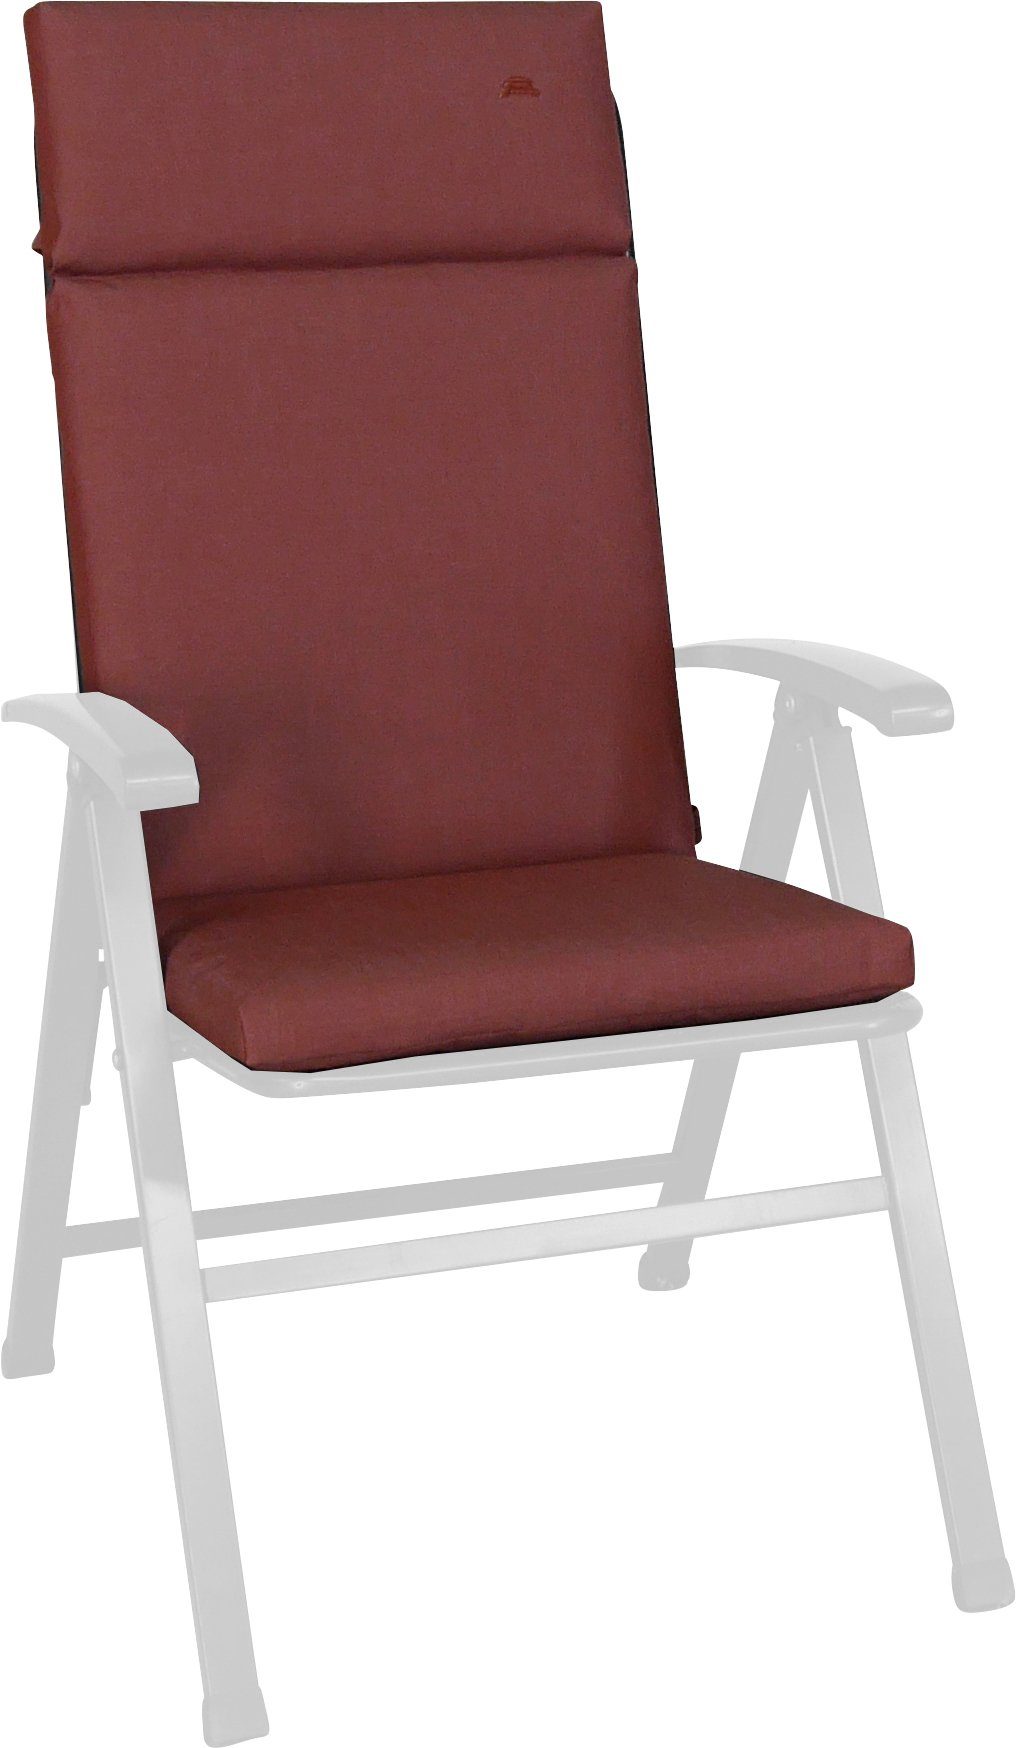 Angerer Freizeitmöbel Sesselauflage Sun, terracotta St) (1